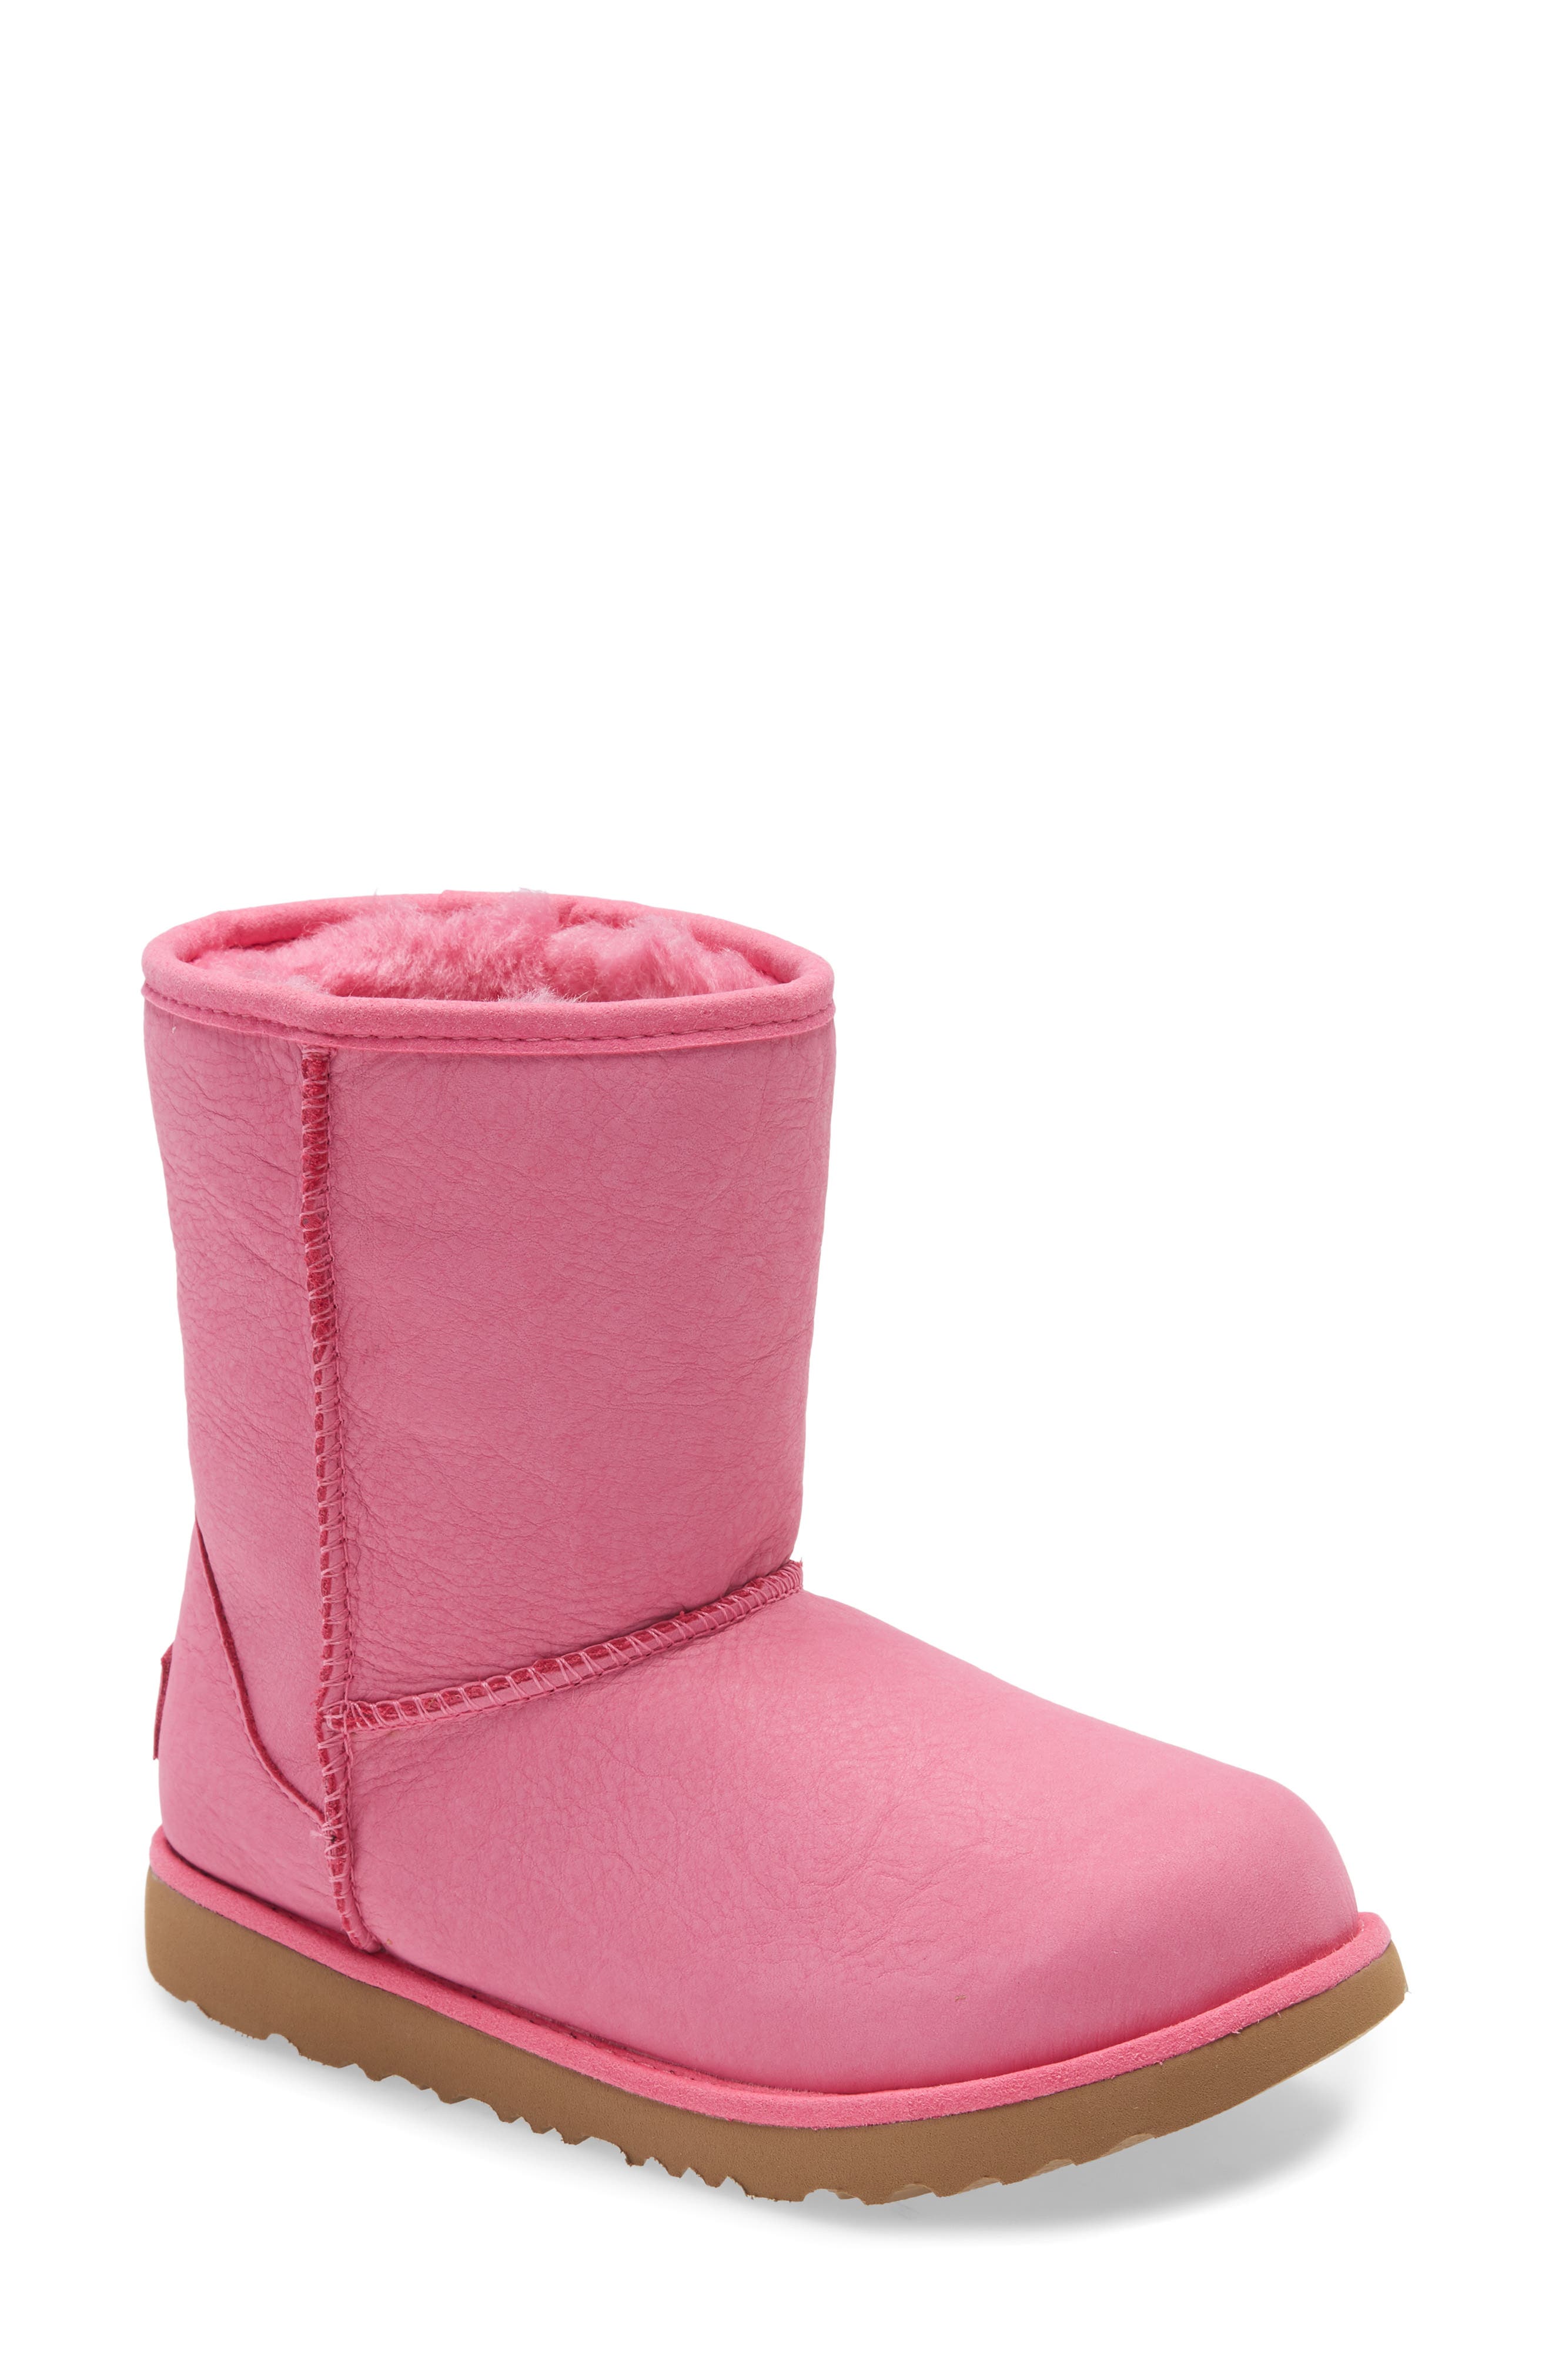 toddler ugg boots pink